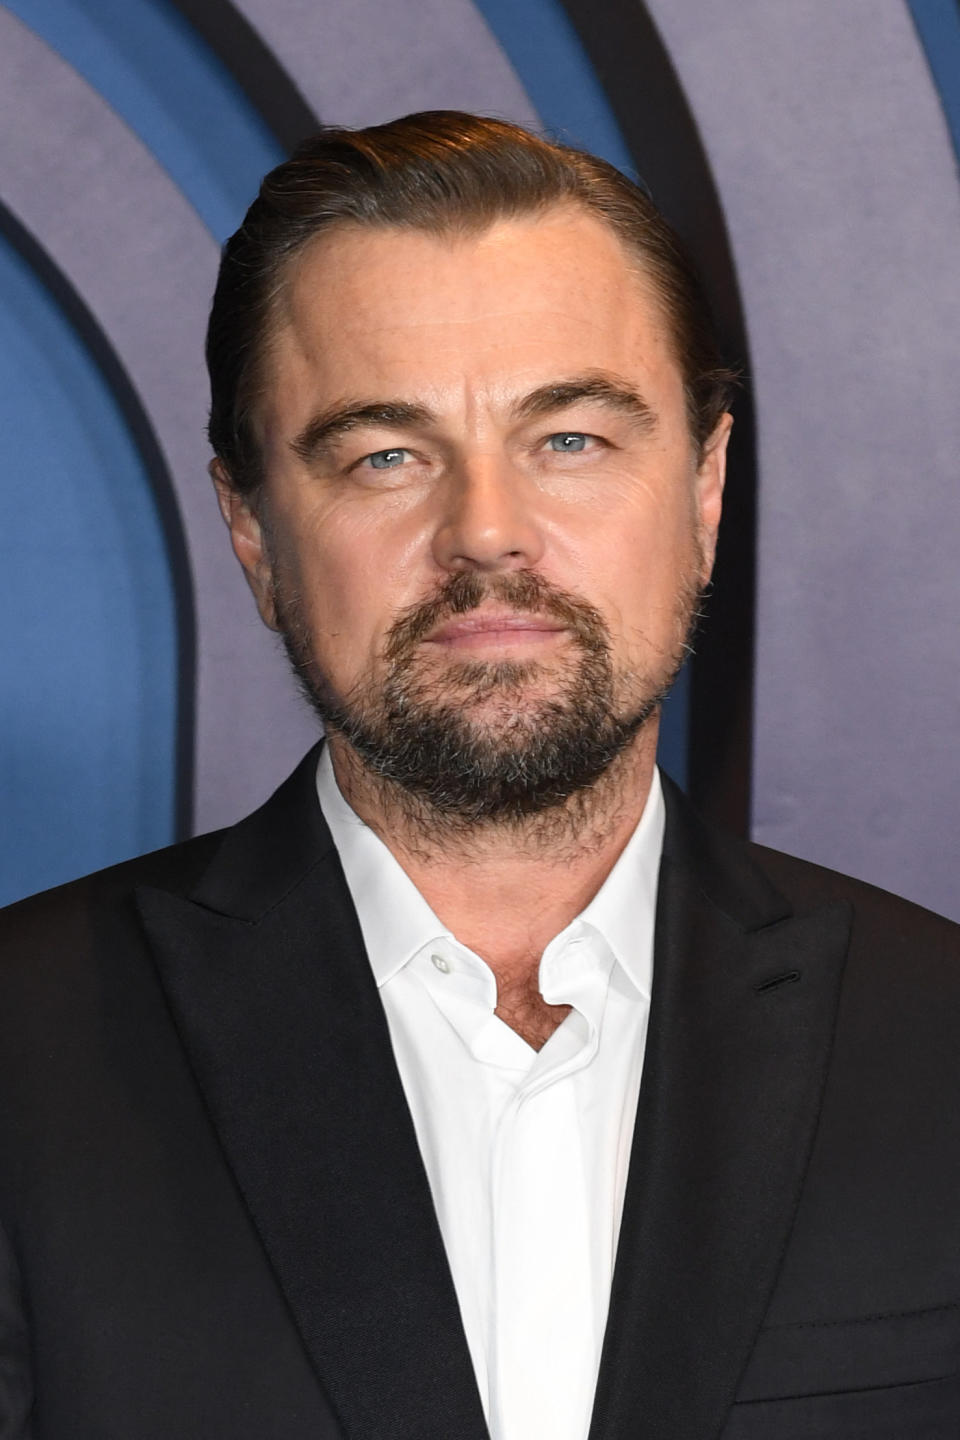 Leonardo DiCaprio in a suit and tie